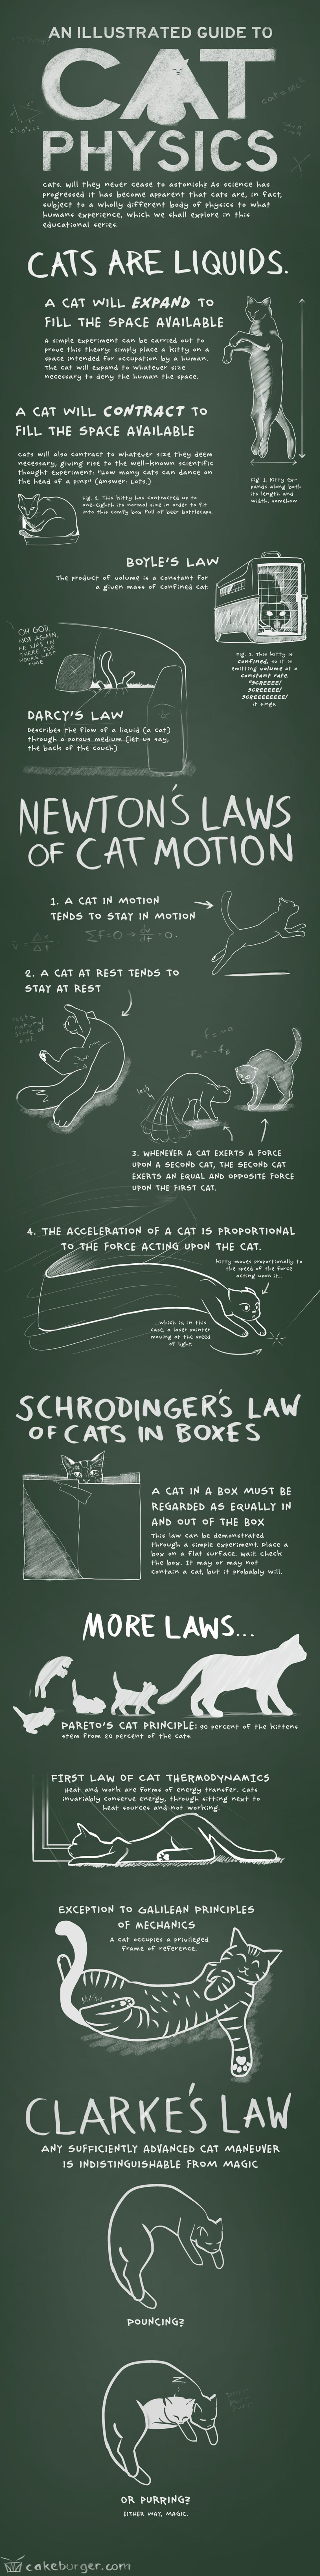 Cat Physics Infographic